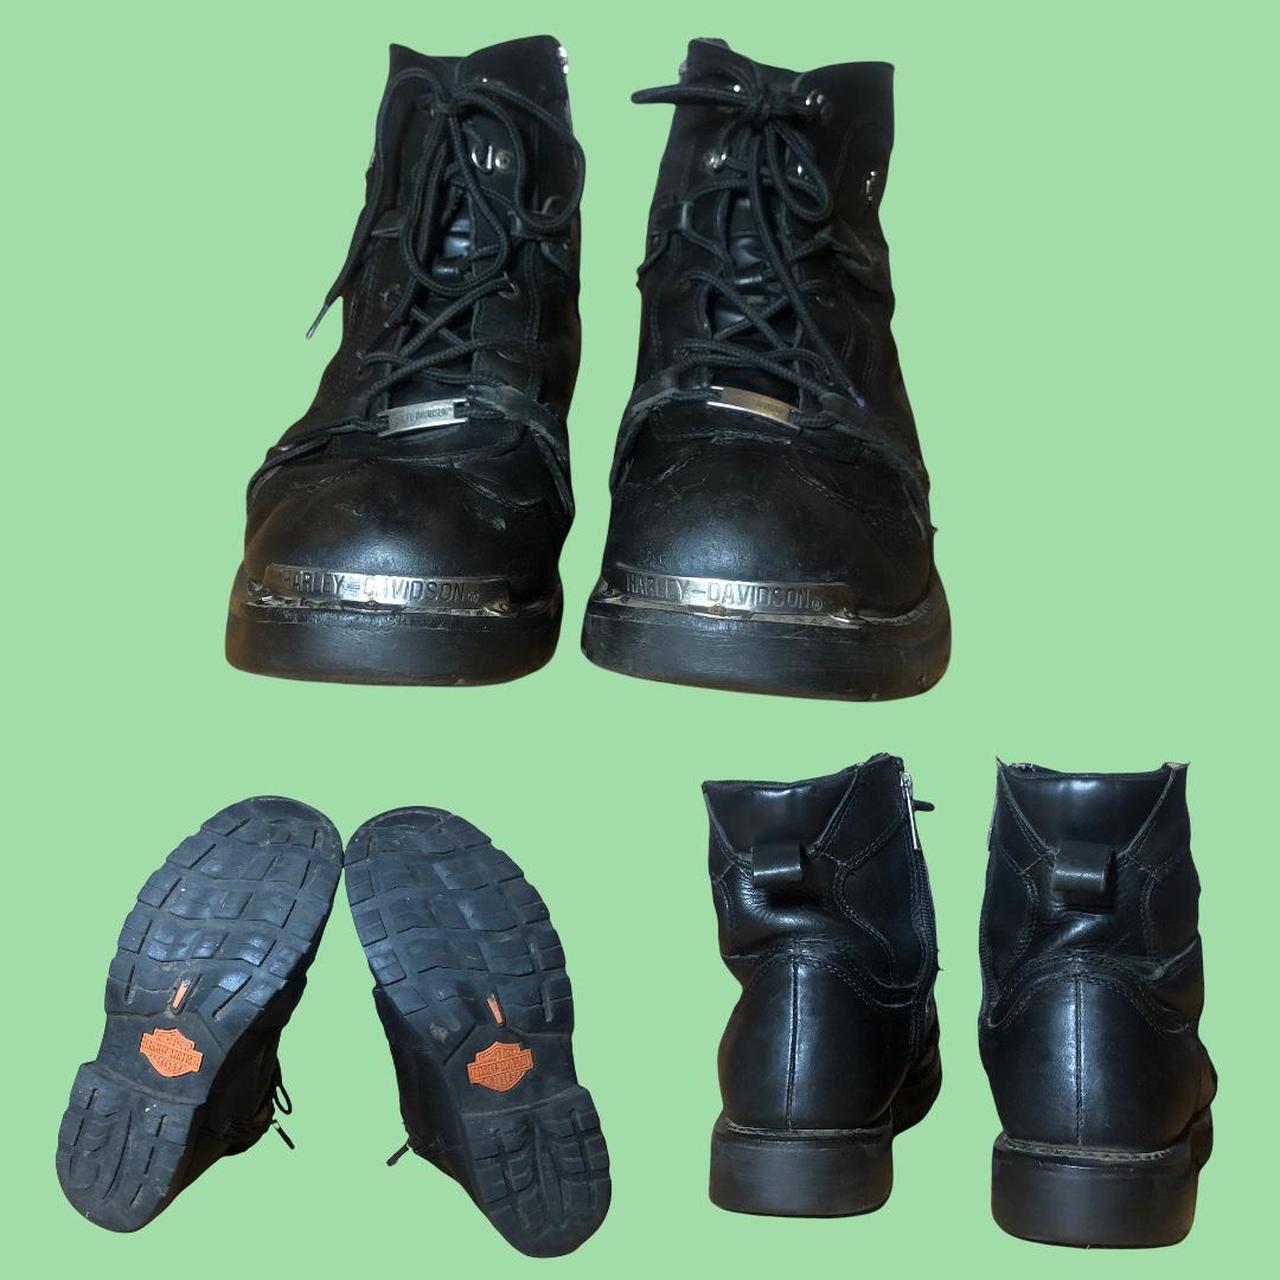 Product Image 3 - Super punk Harley Davidson boots

Sick